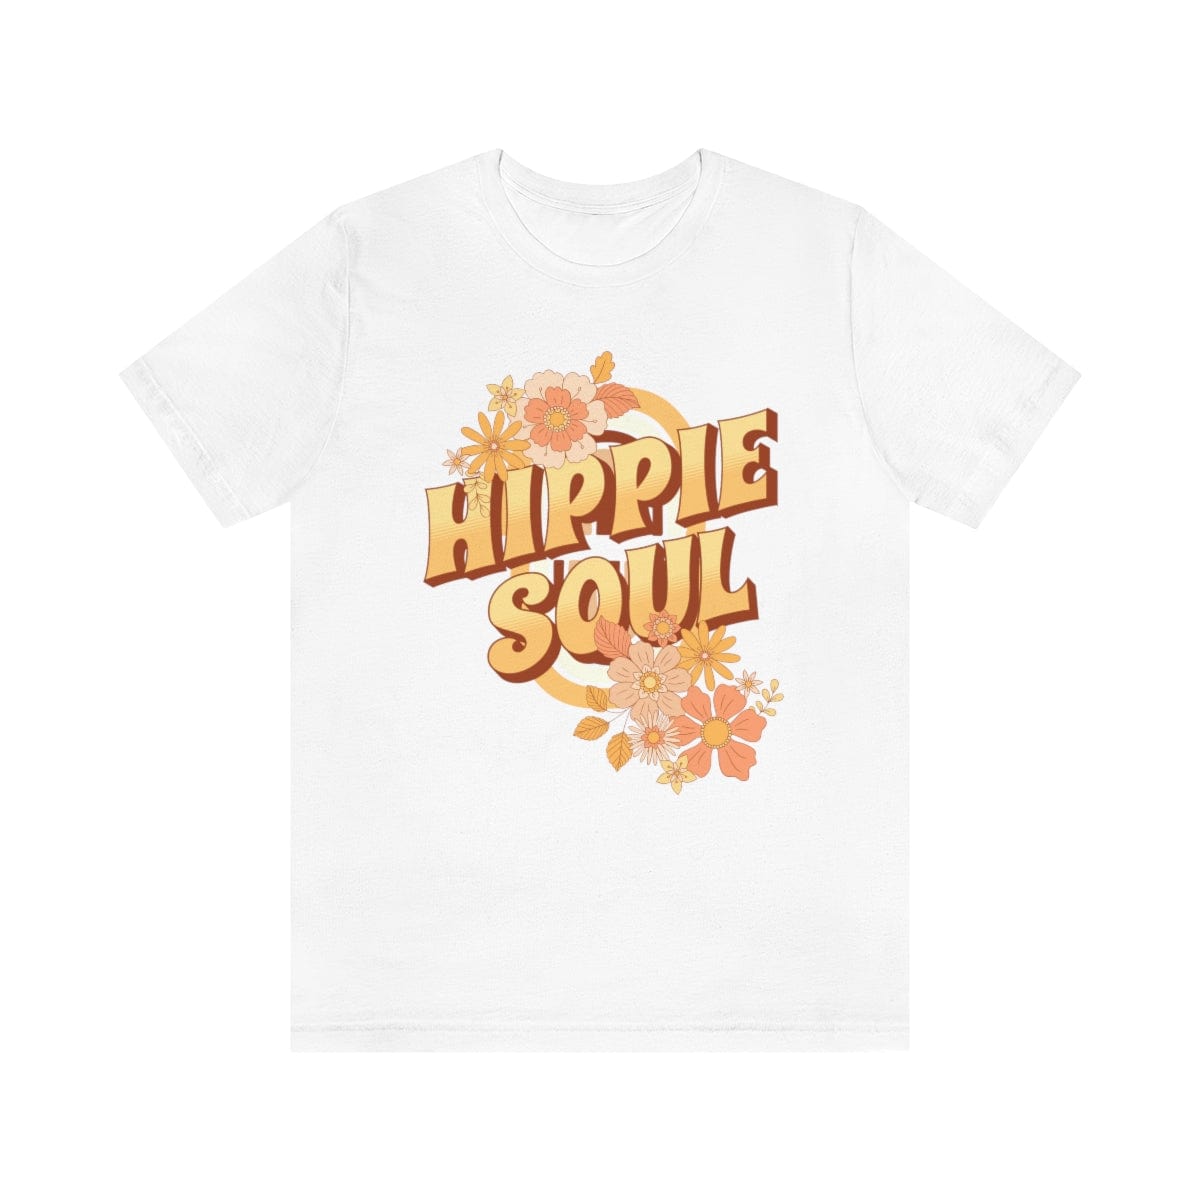 Retro Hippie Soul, Flower Power 70&